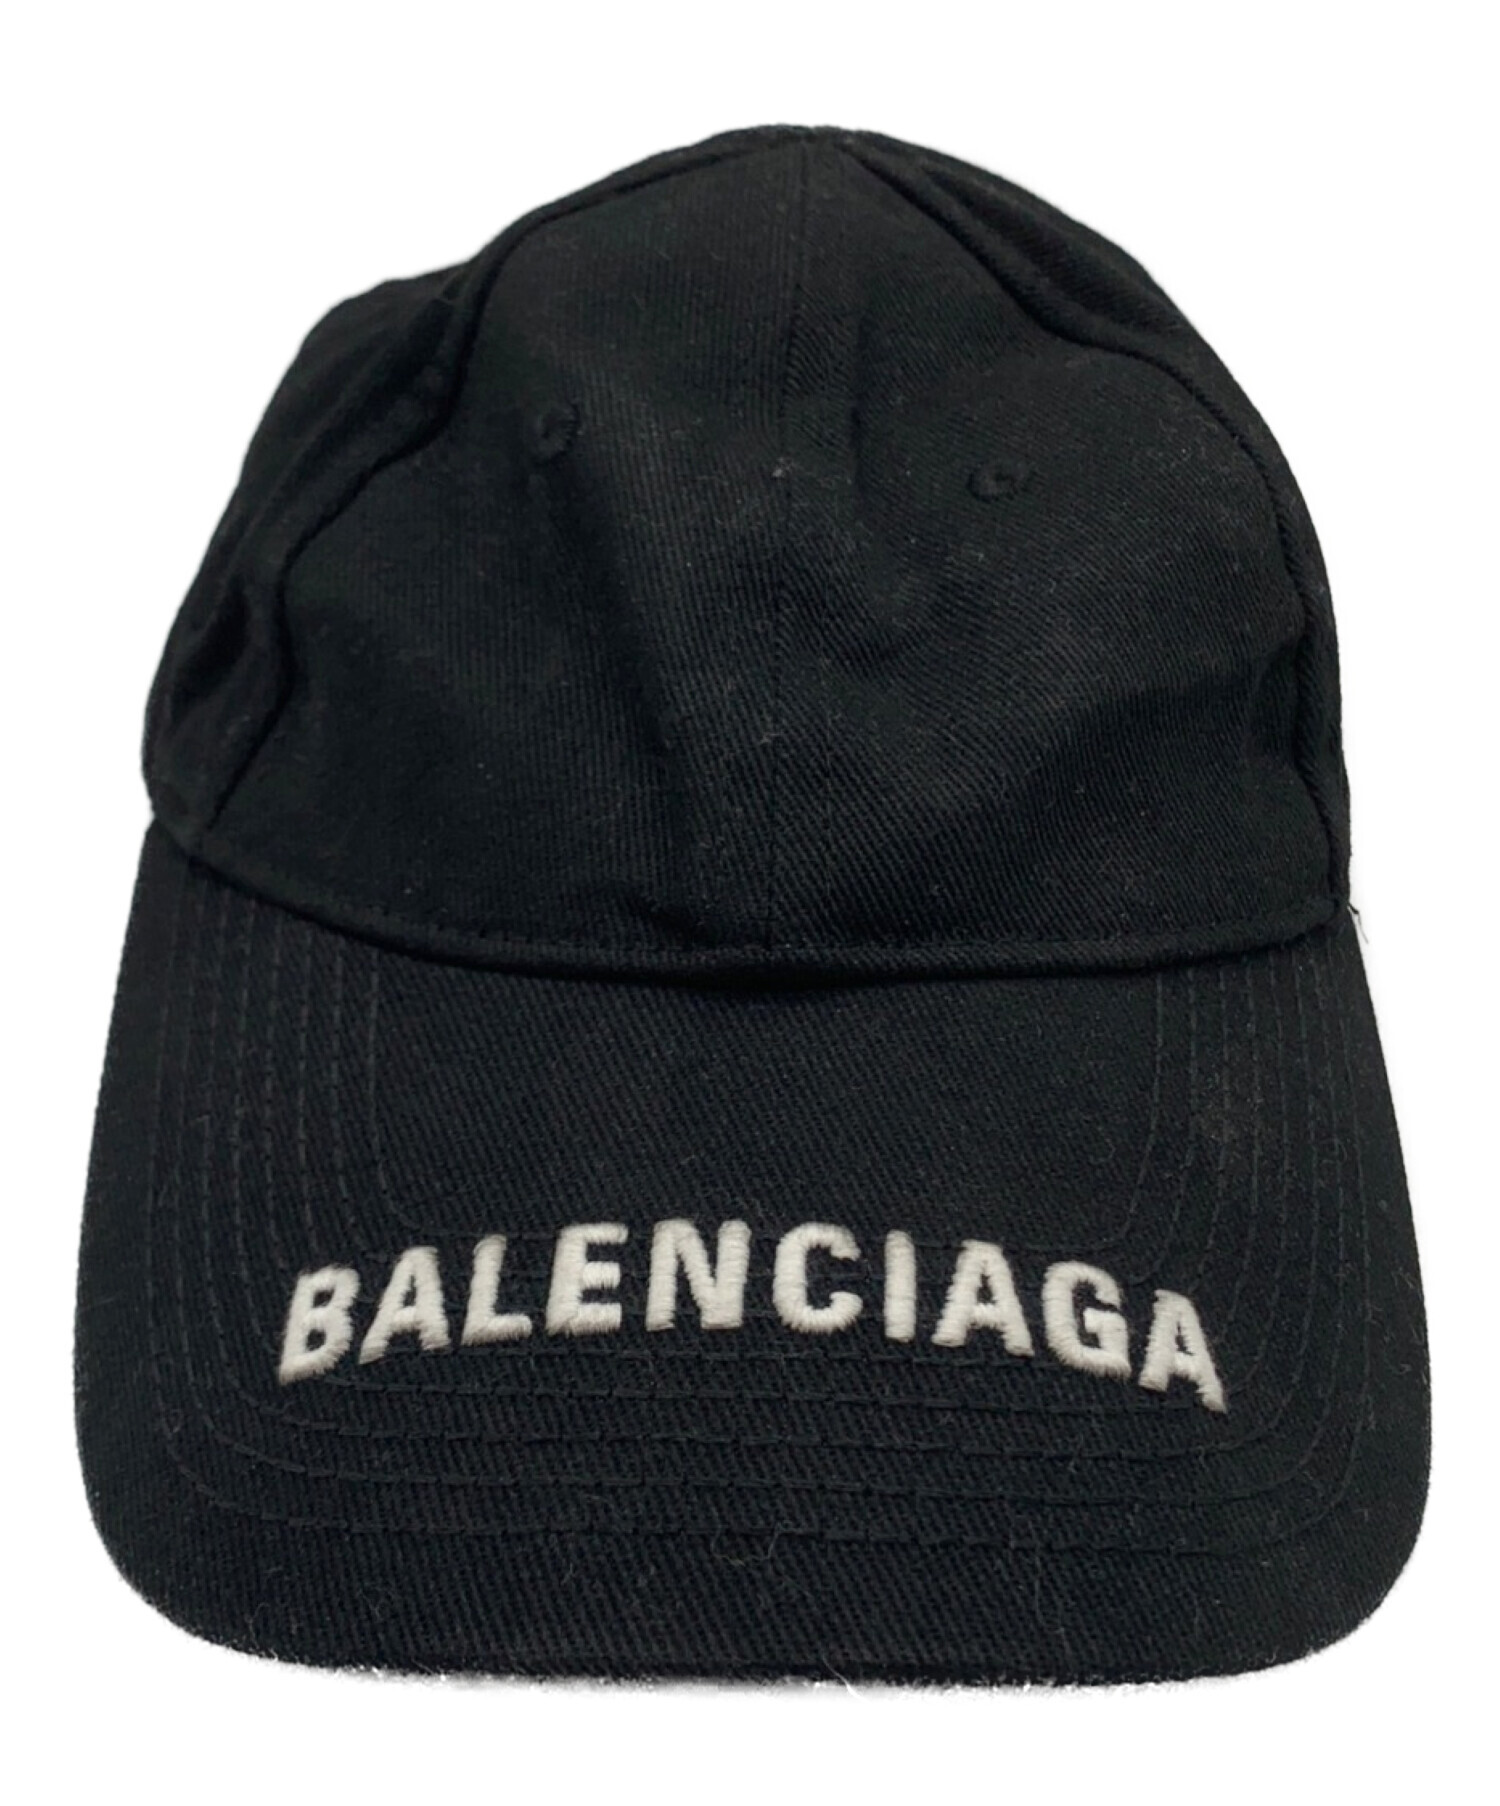 BALENCIAGA_HBALENCIAGA バイザーロゴ キャップ つばロゴ